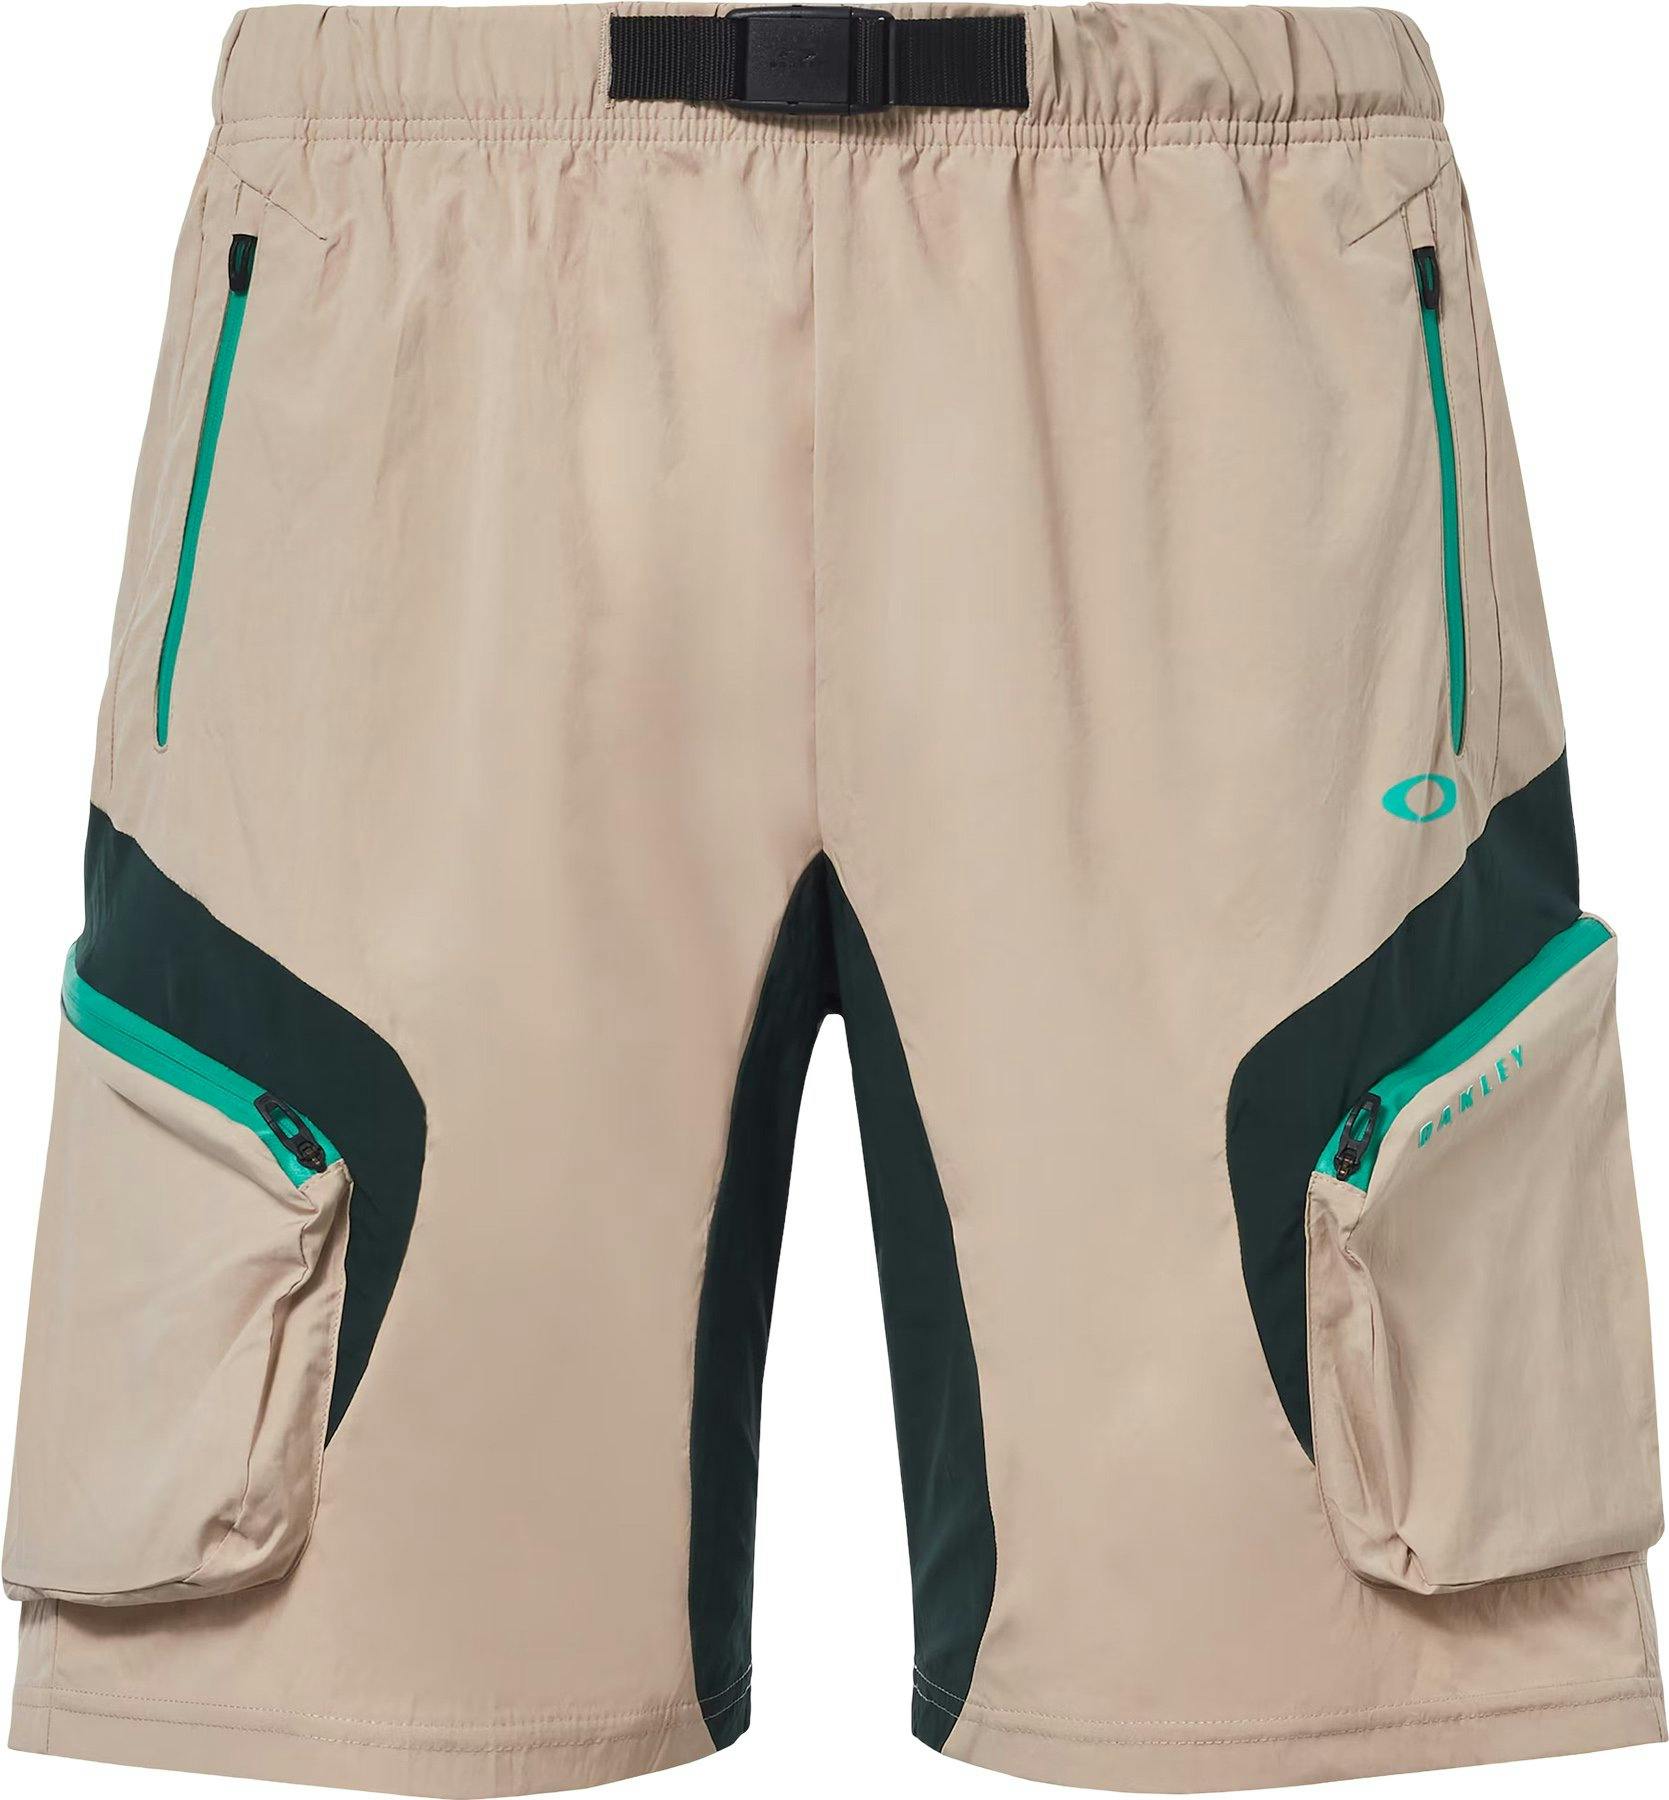 Product image for Latitude Cargo Shorts - Men's